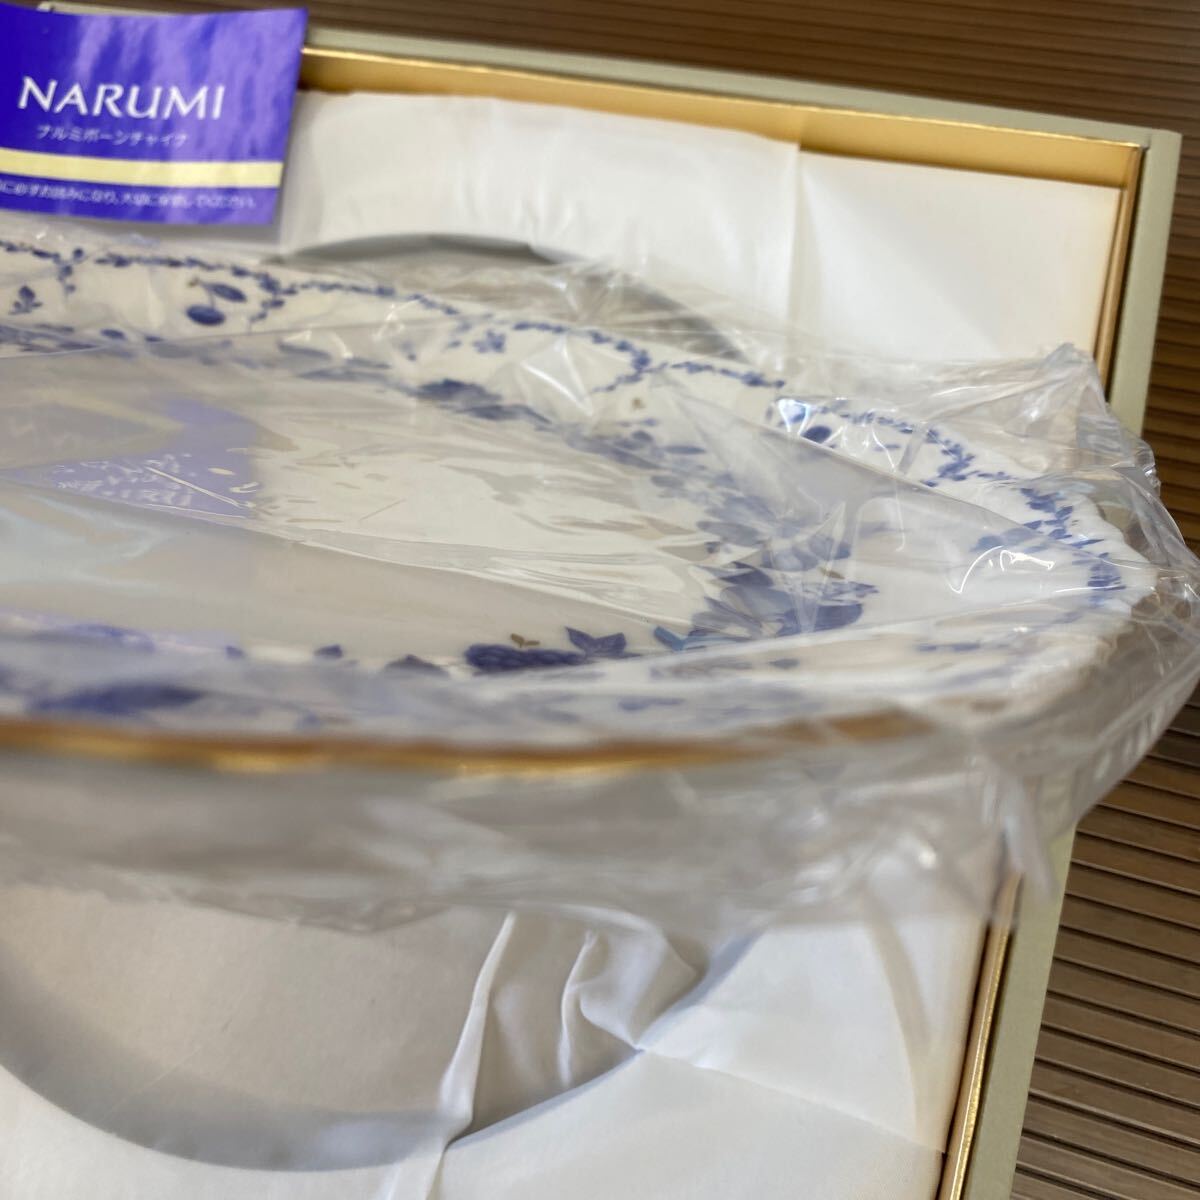 NARUMI ナルミ ボーンチャイナ ミラノ シリーズ プレート 大皿 アラカルトプレート 果物柄 洋食器 ブランド 27㎝ 未使用 洋皿の画像4